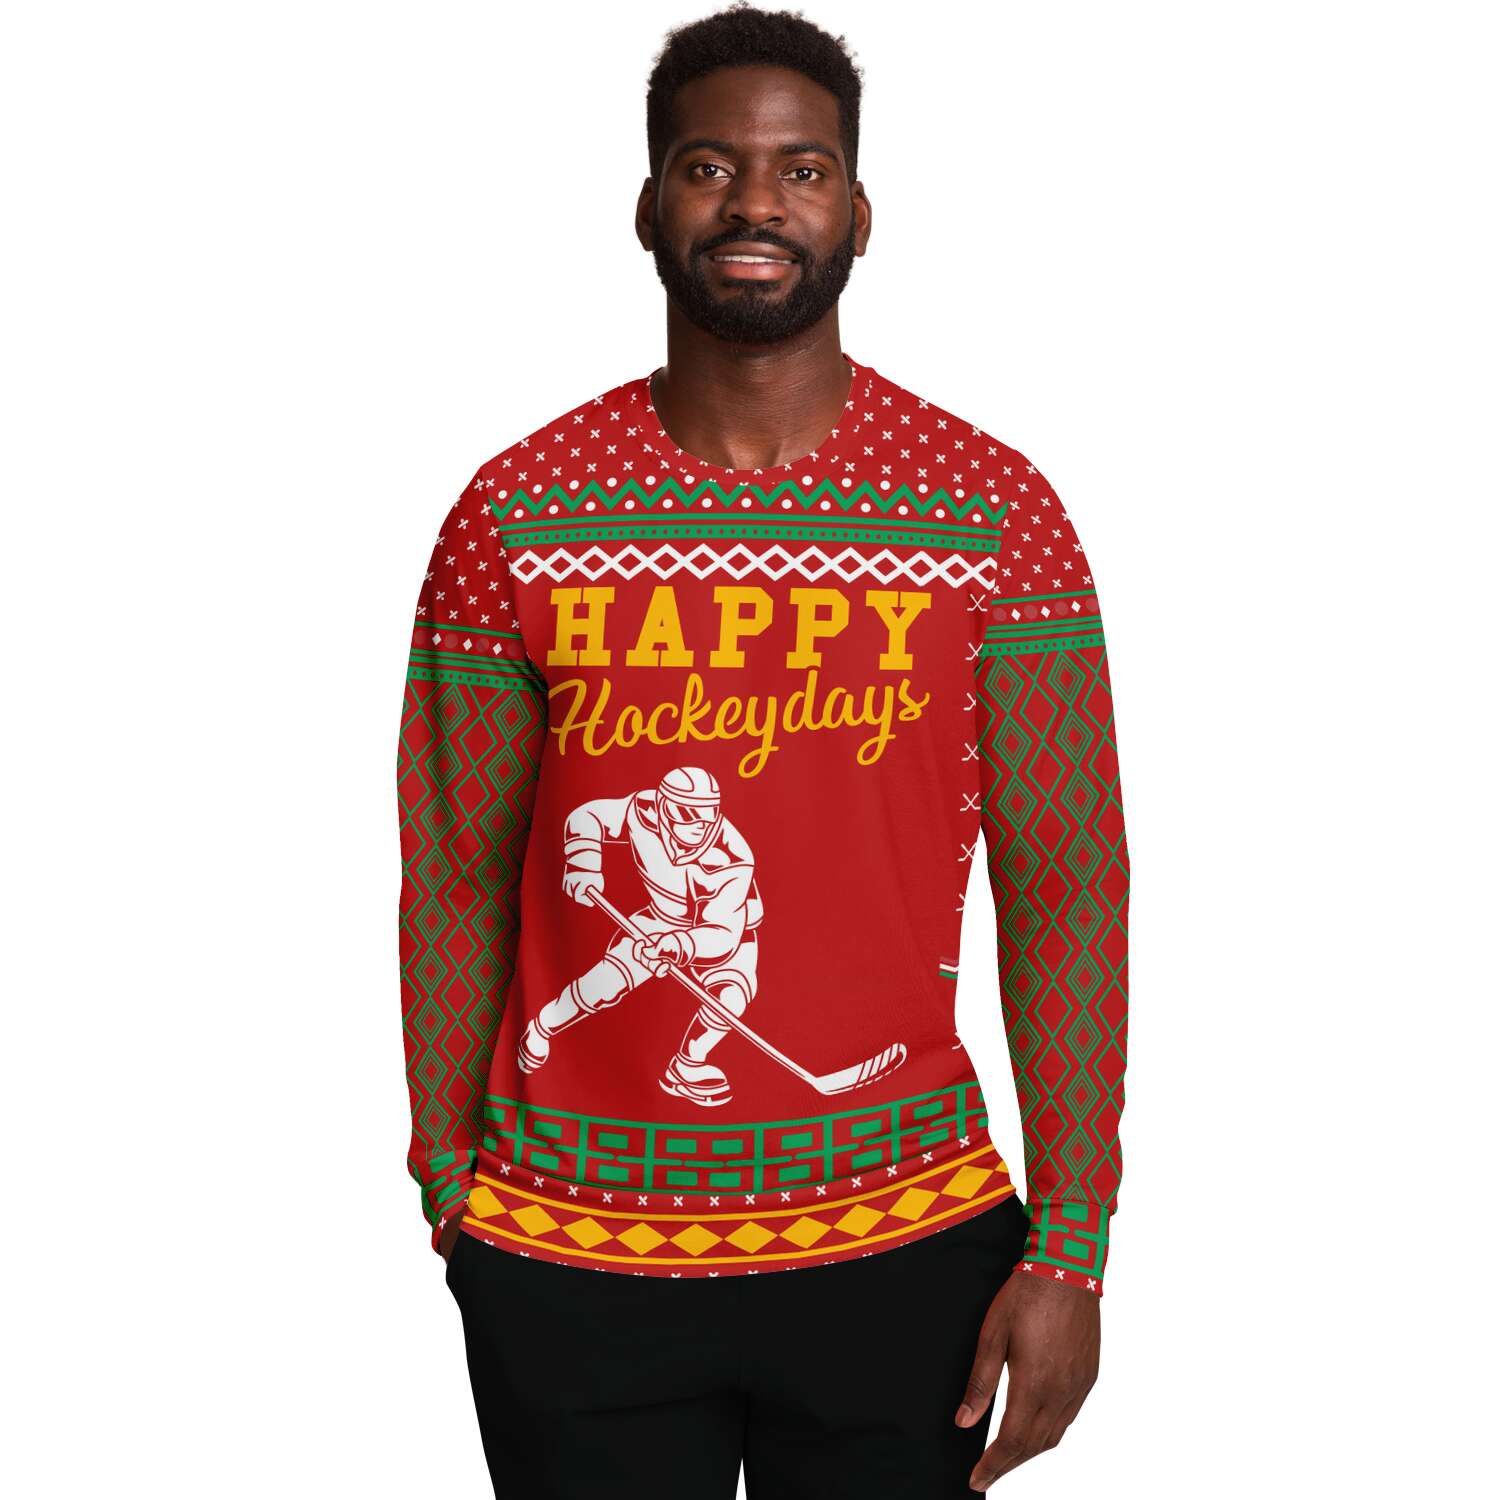 Happy Hockey Days Sweatshirt | Unisex Ugly Christmas Sweater, Xmas Sweater, Holiday Sweater, Festive Sweater, Funny Sweater, Funny Party Shirt